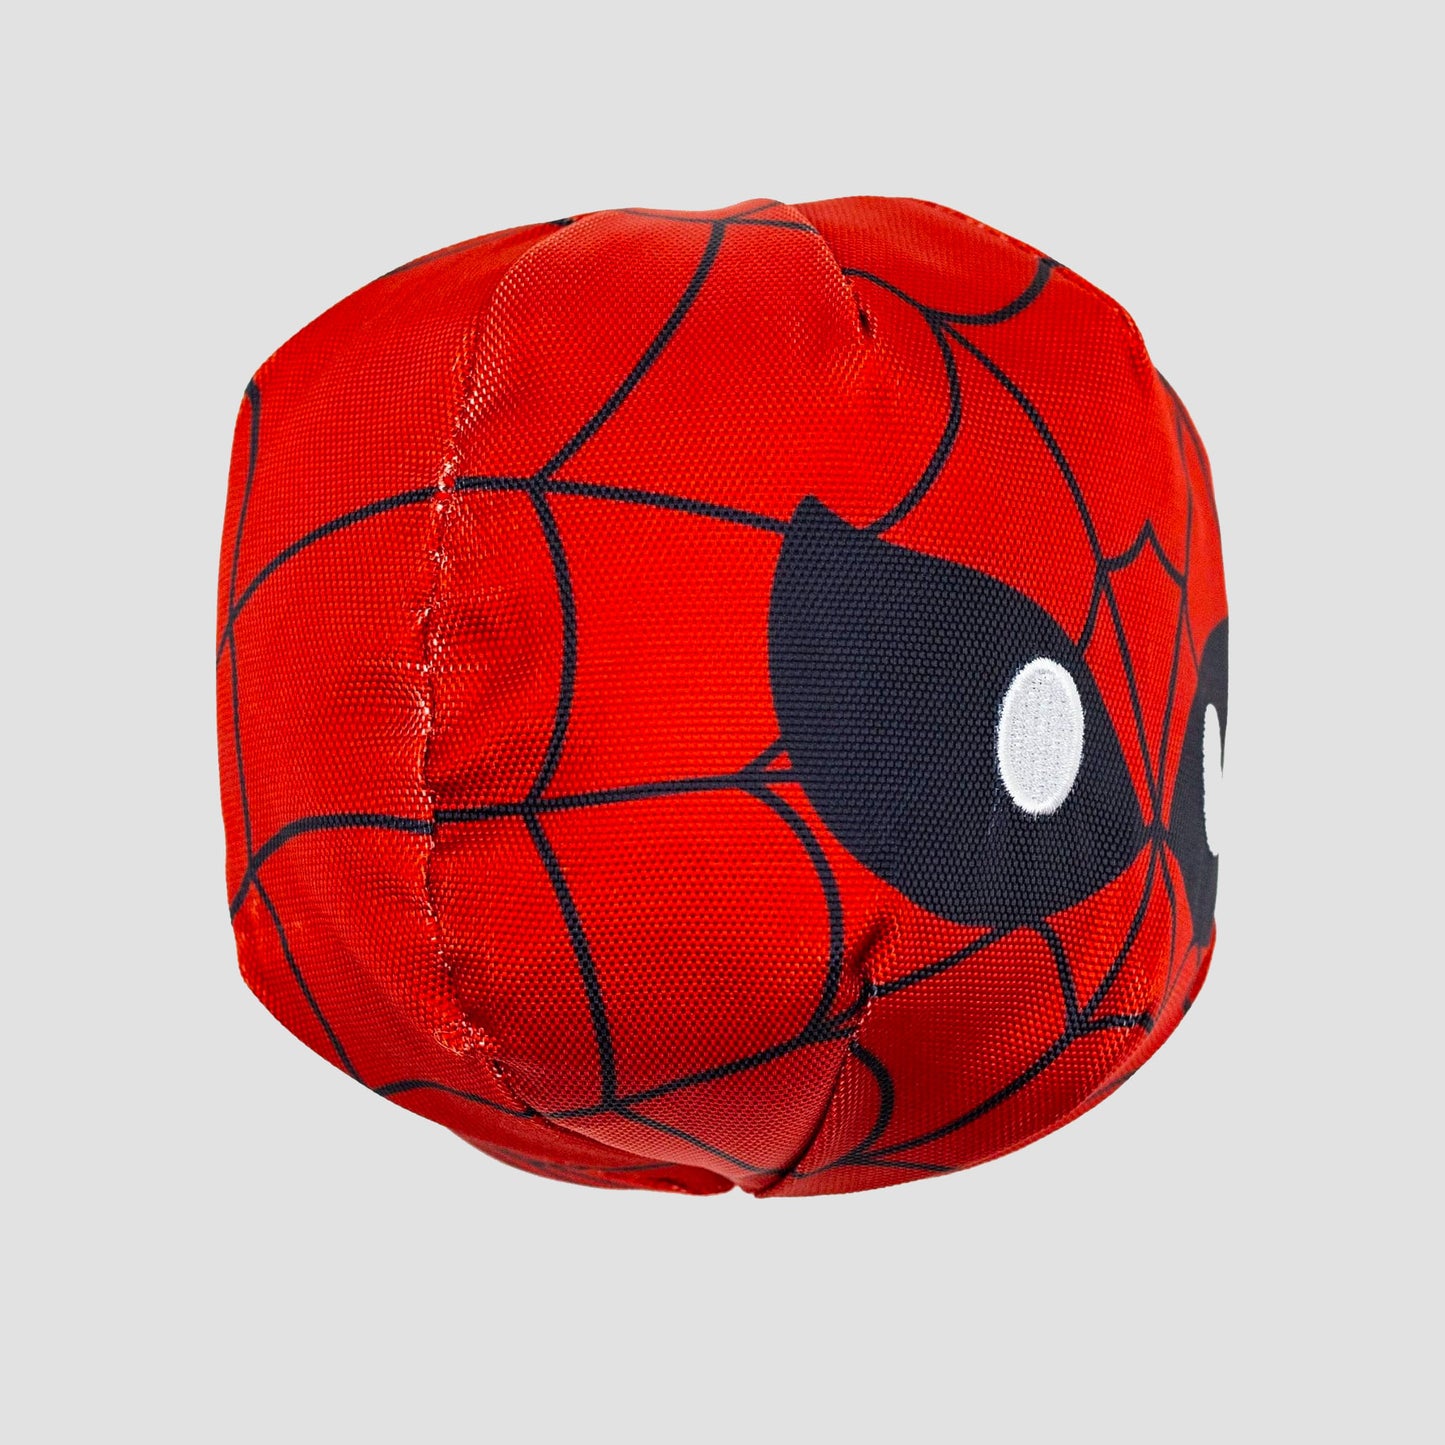 Spider-Man Face (Marvel) Ballistic Nylon Dog Plush Squeaker Toy